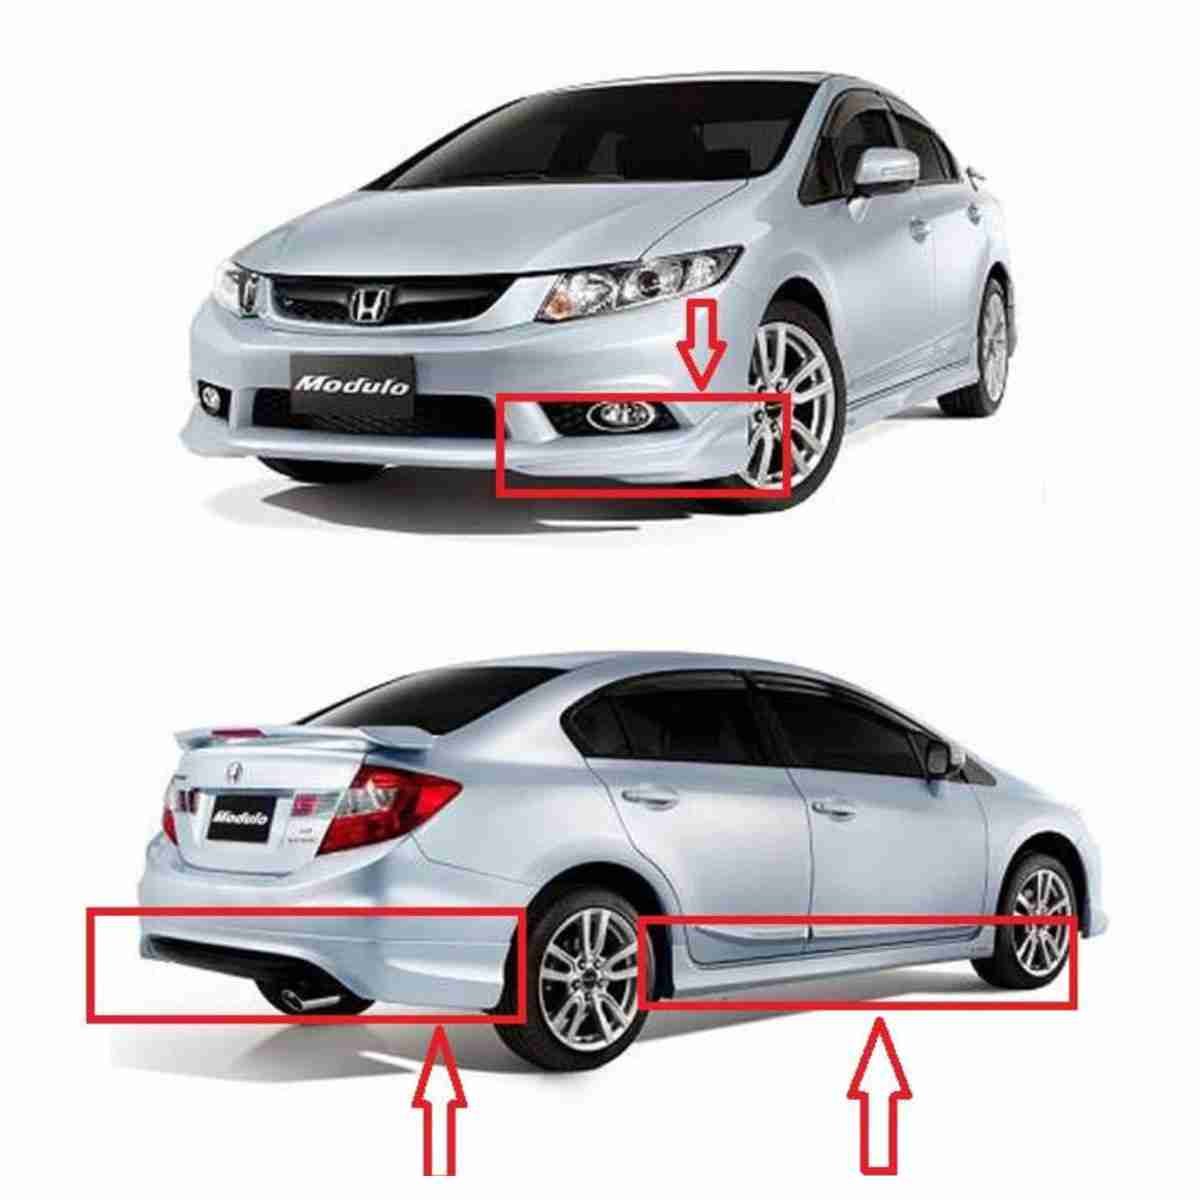 Honda Civic 2012-2015 Body Kit Modulo Style